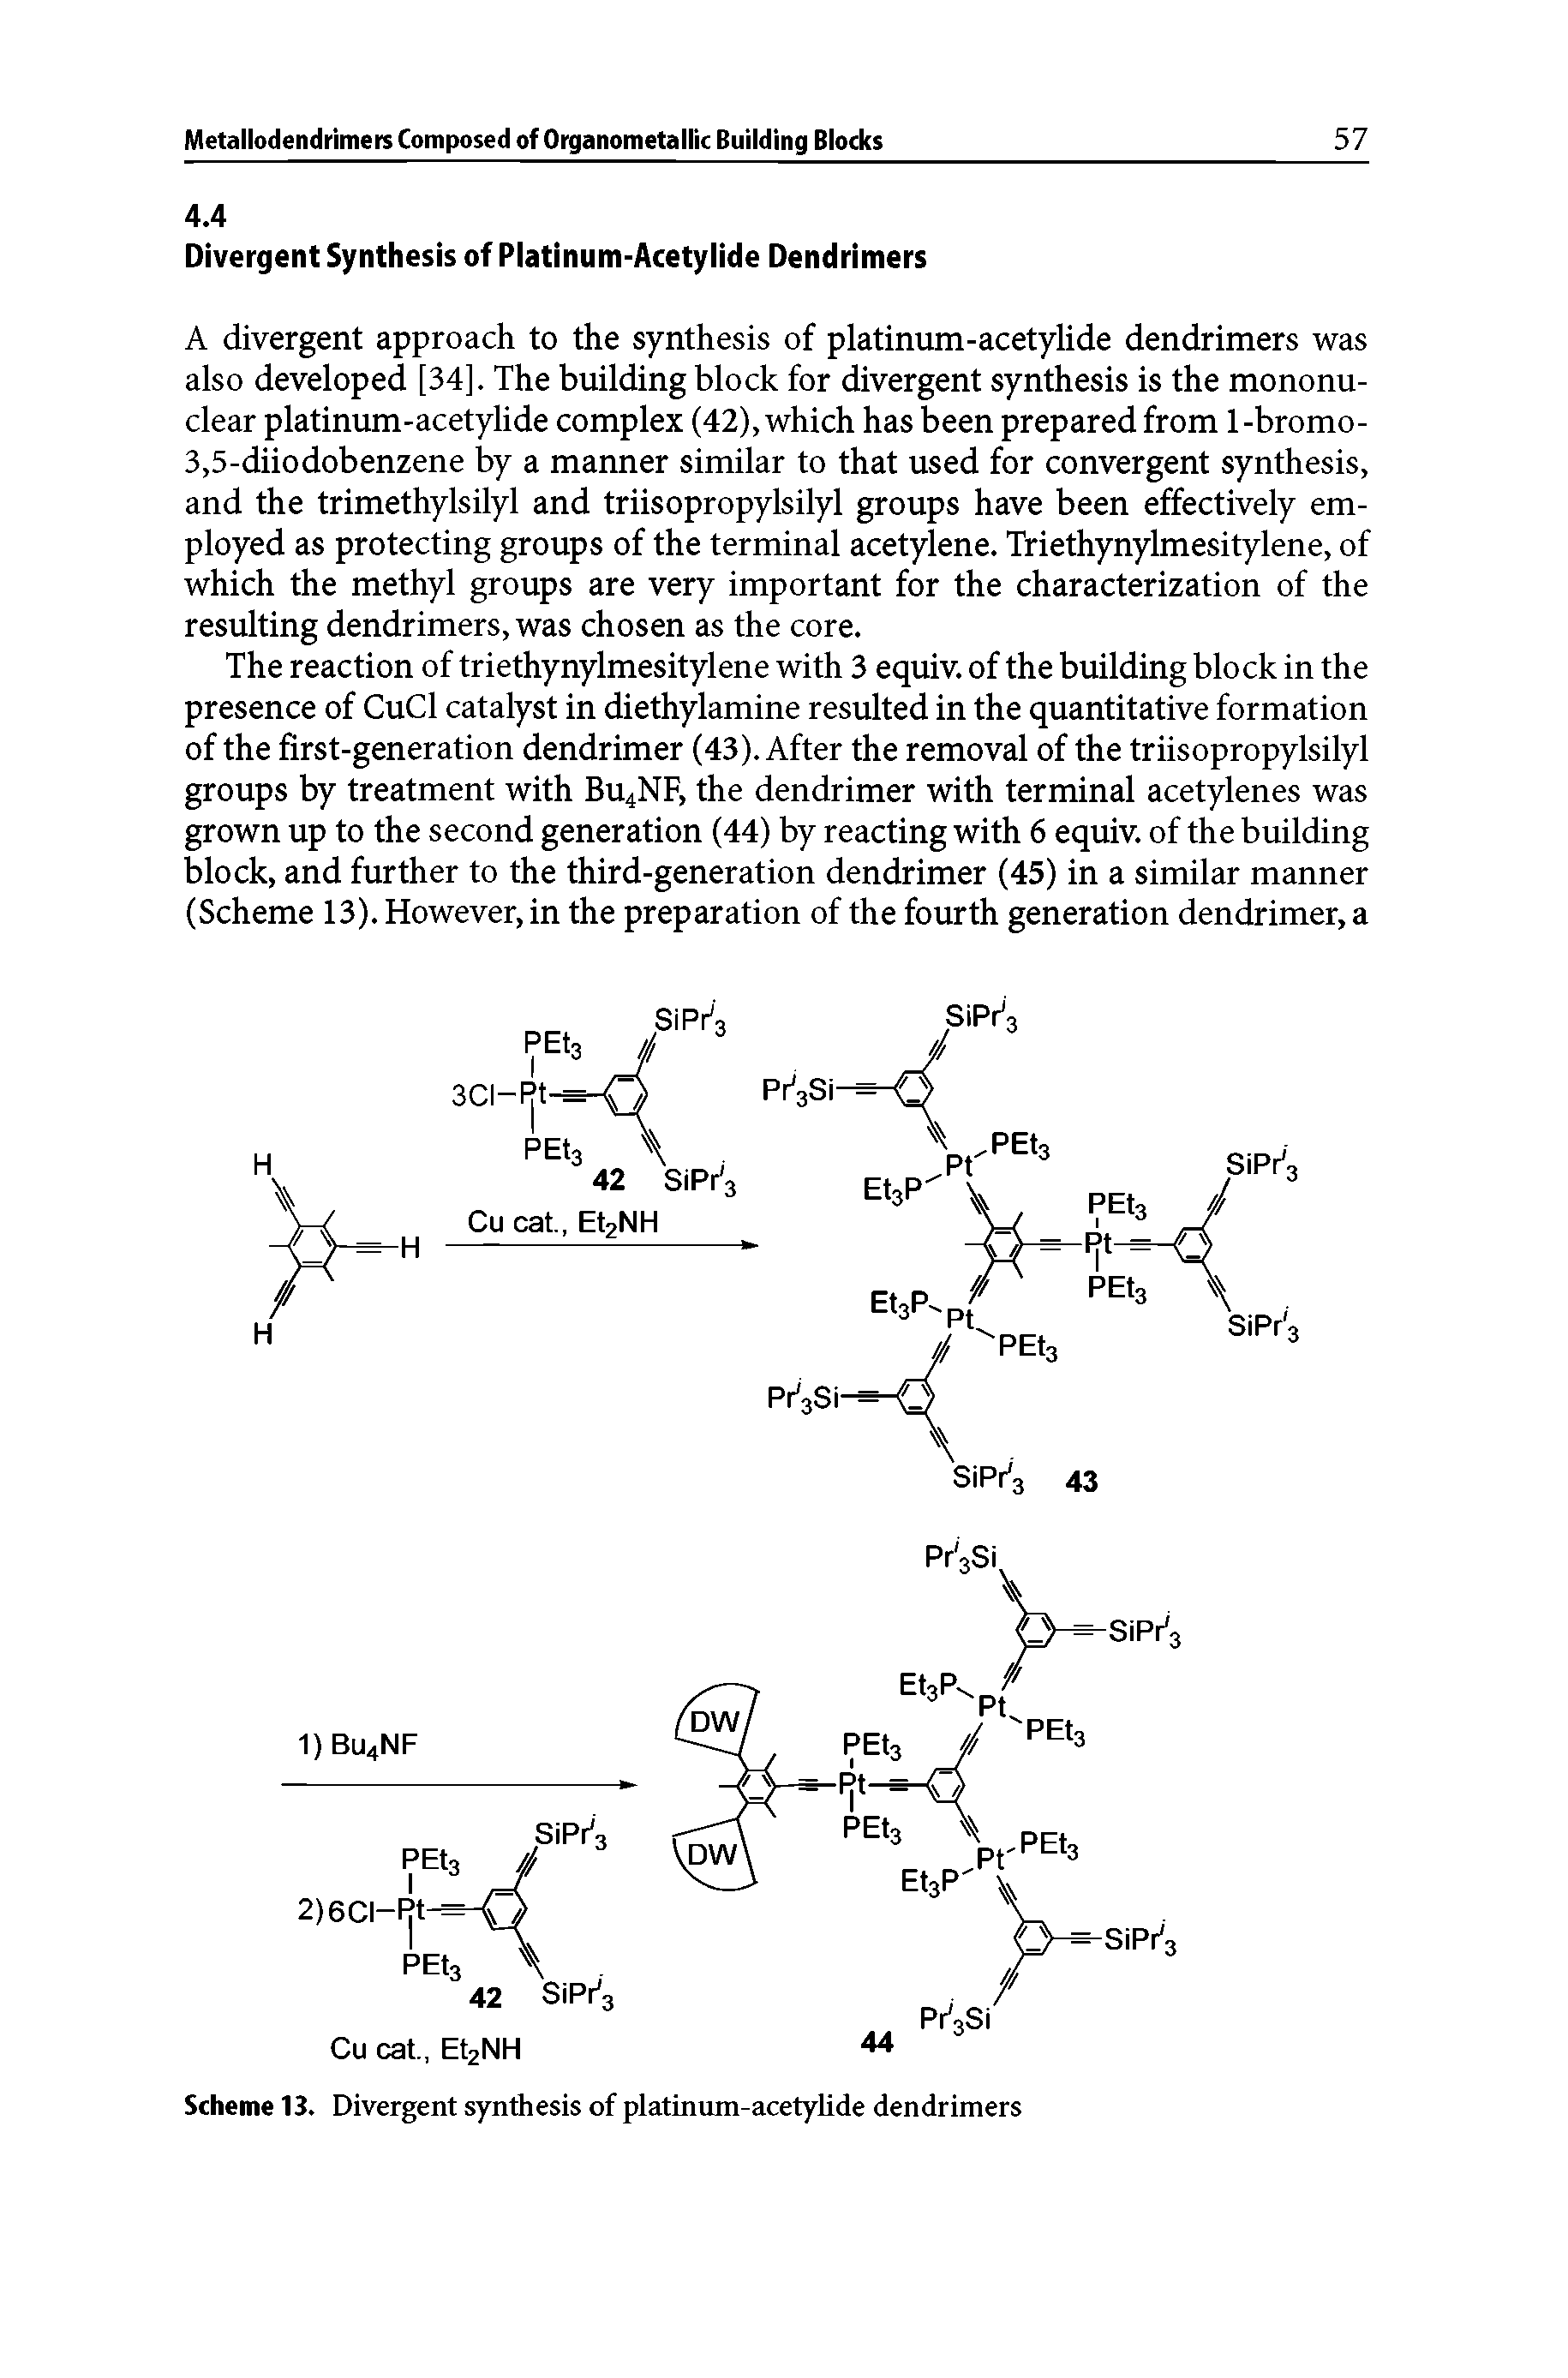 Scheme 13. Divergent synthesis of platinum-acetylide dendrimers...